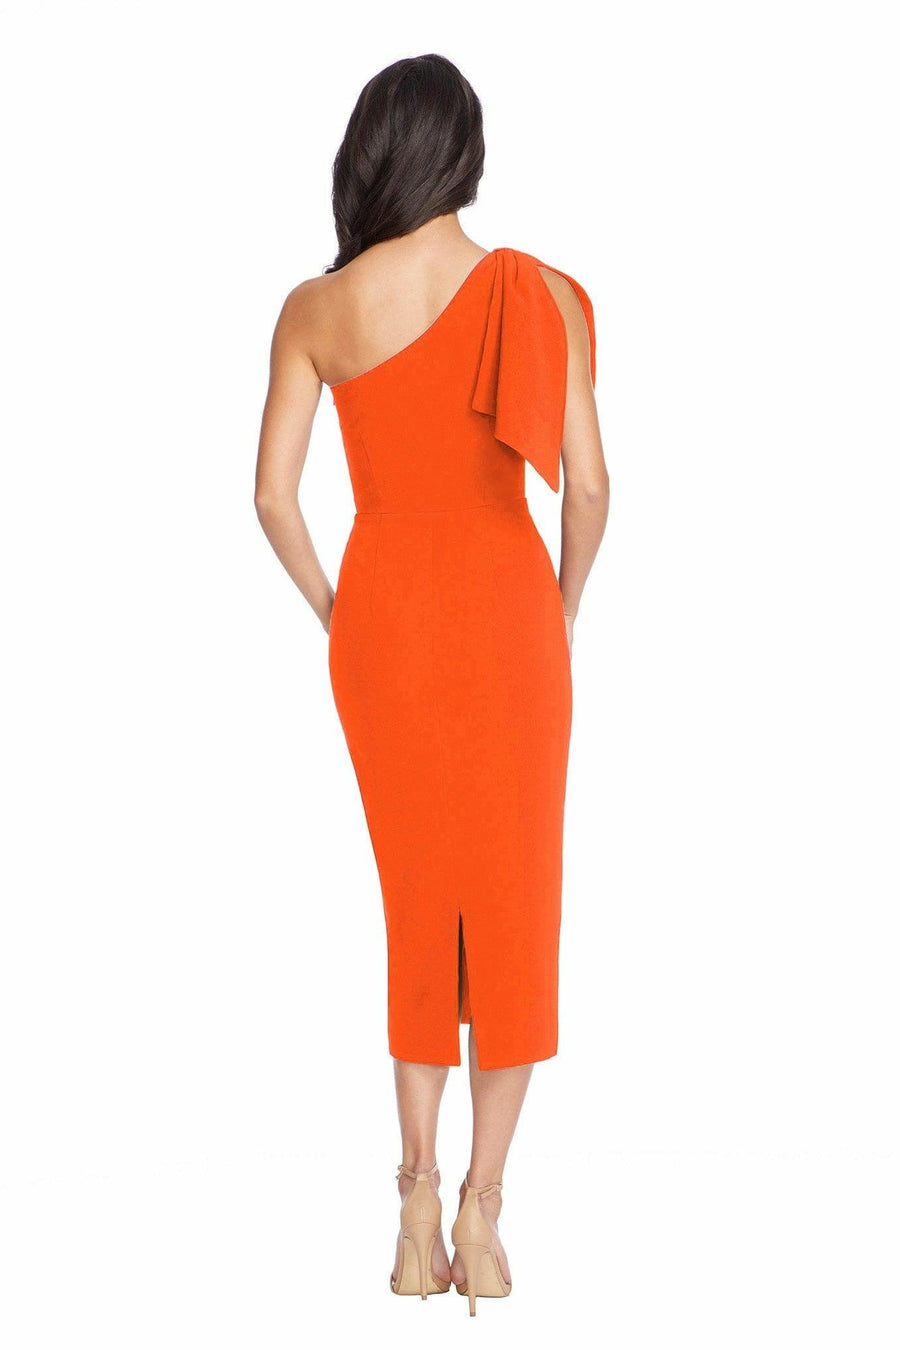 Tiffany One-Shoulder Asymmetrical Crepe Midi Dress - Dress the Population